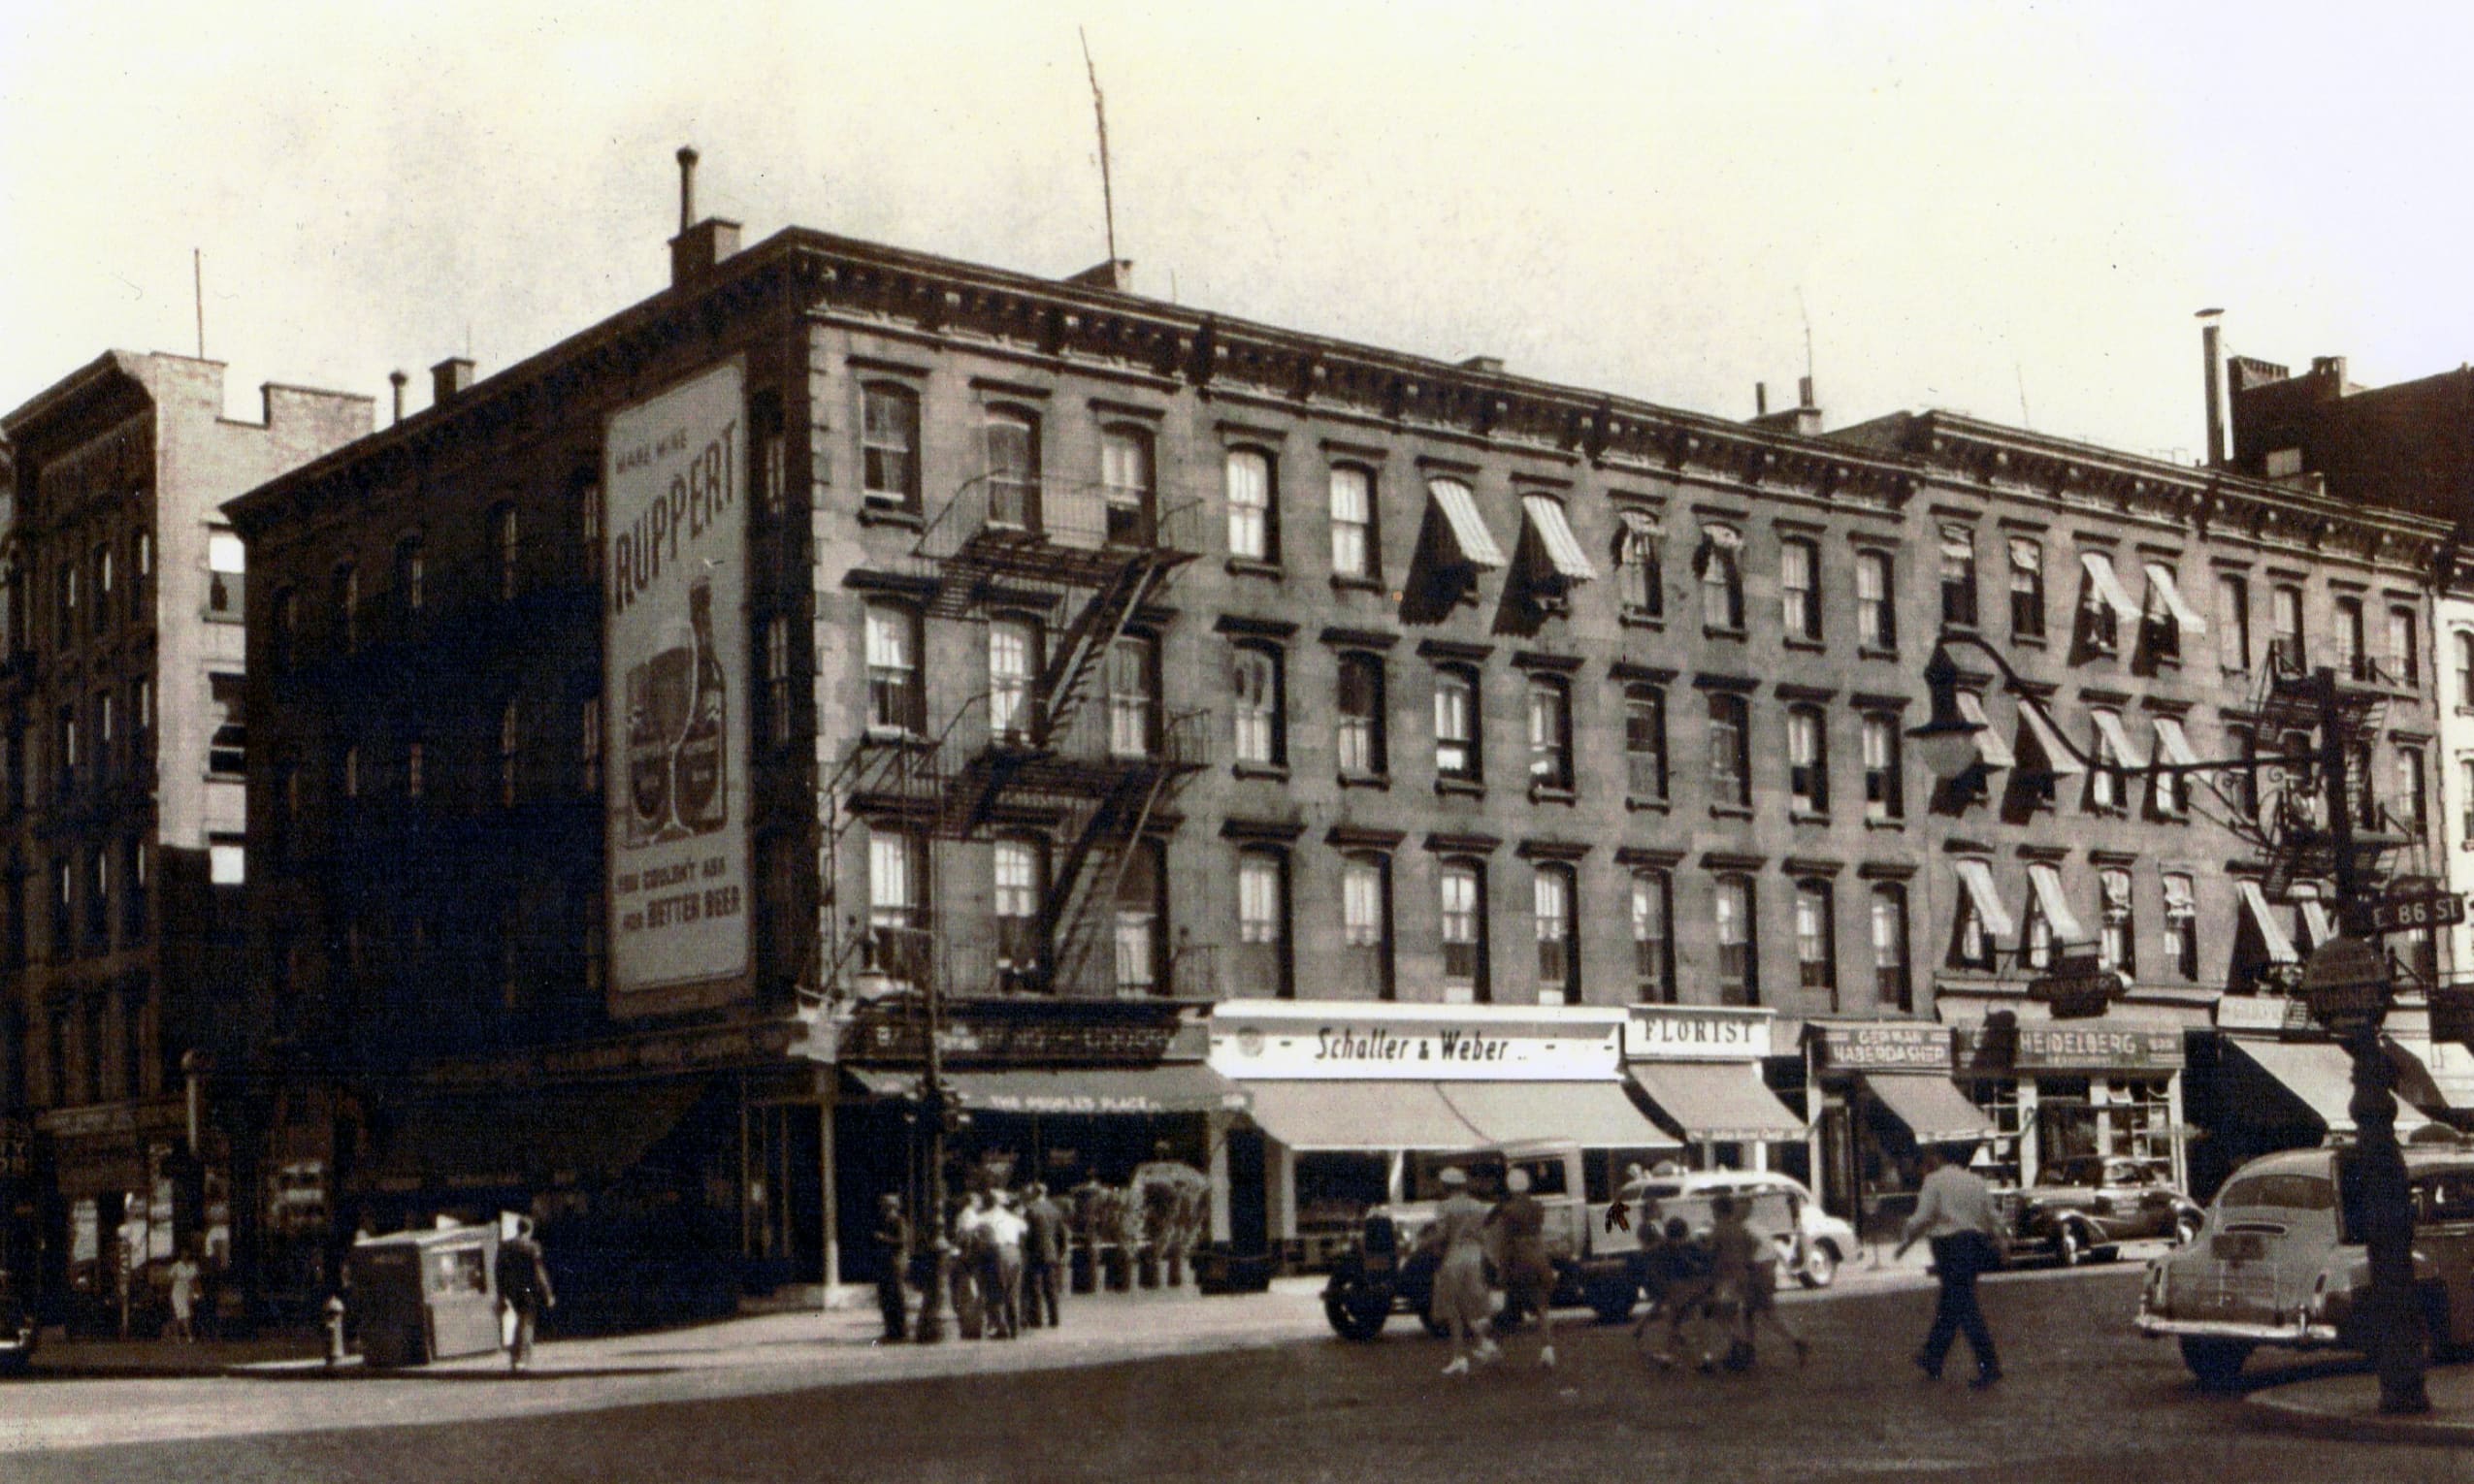 Schaller & Weber storefront and street in 1941